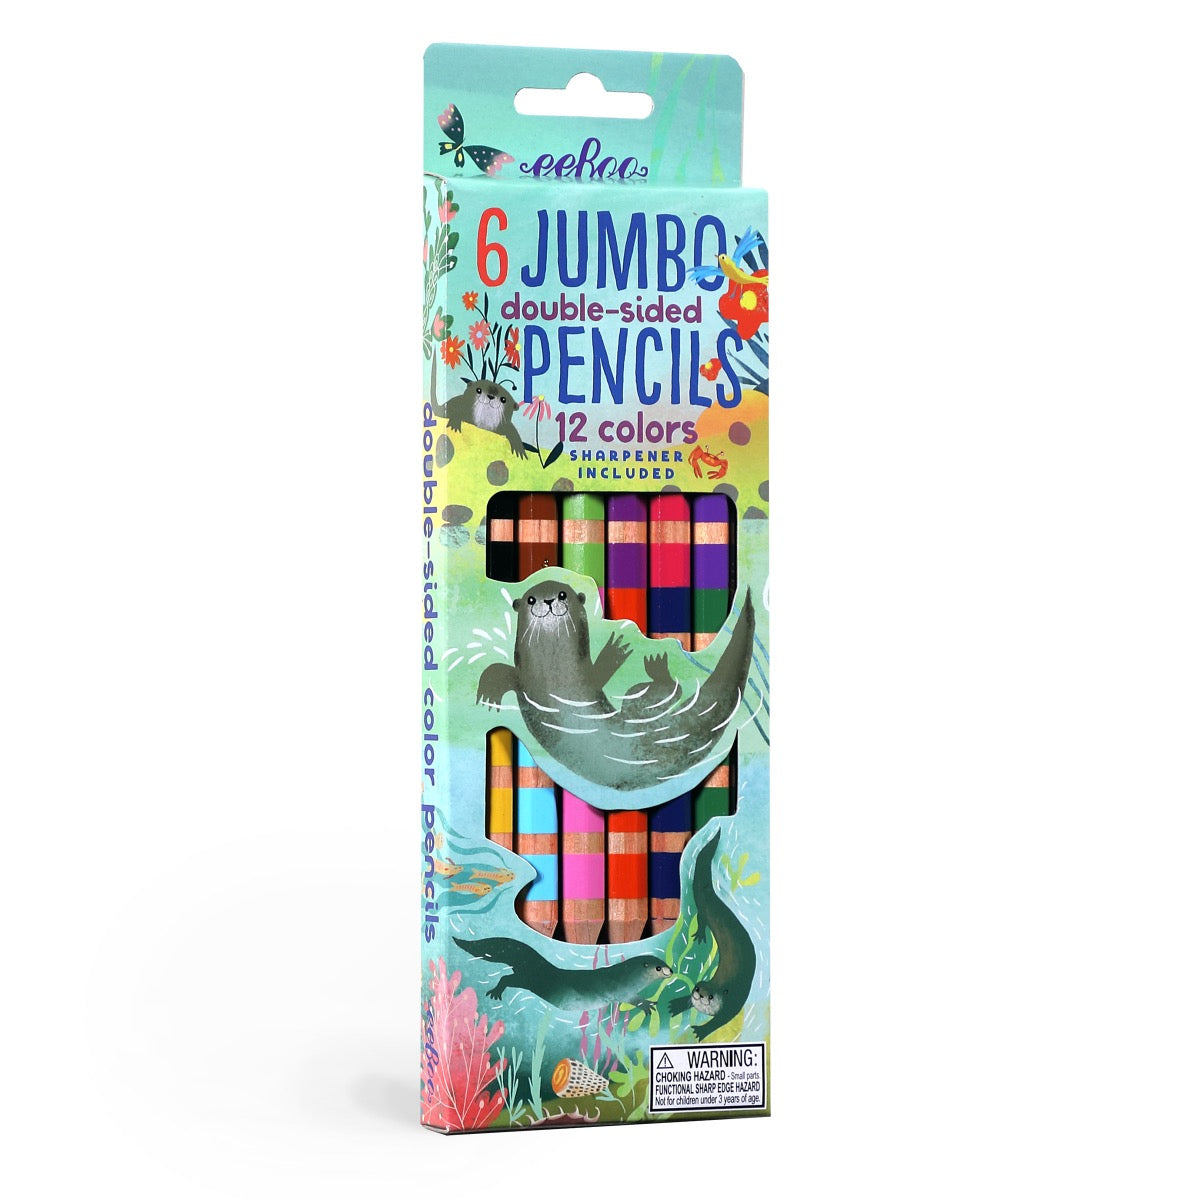 EeBoo 6 Jumbo Double Sided Pencils - Otters